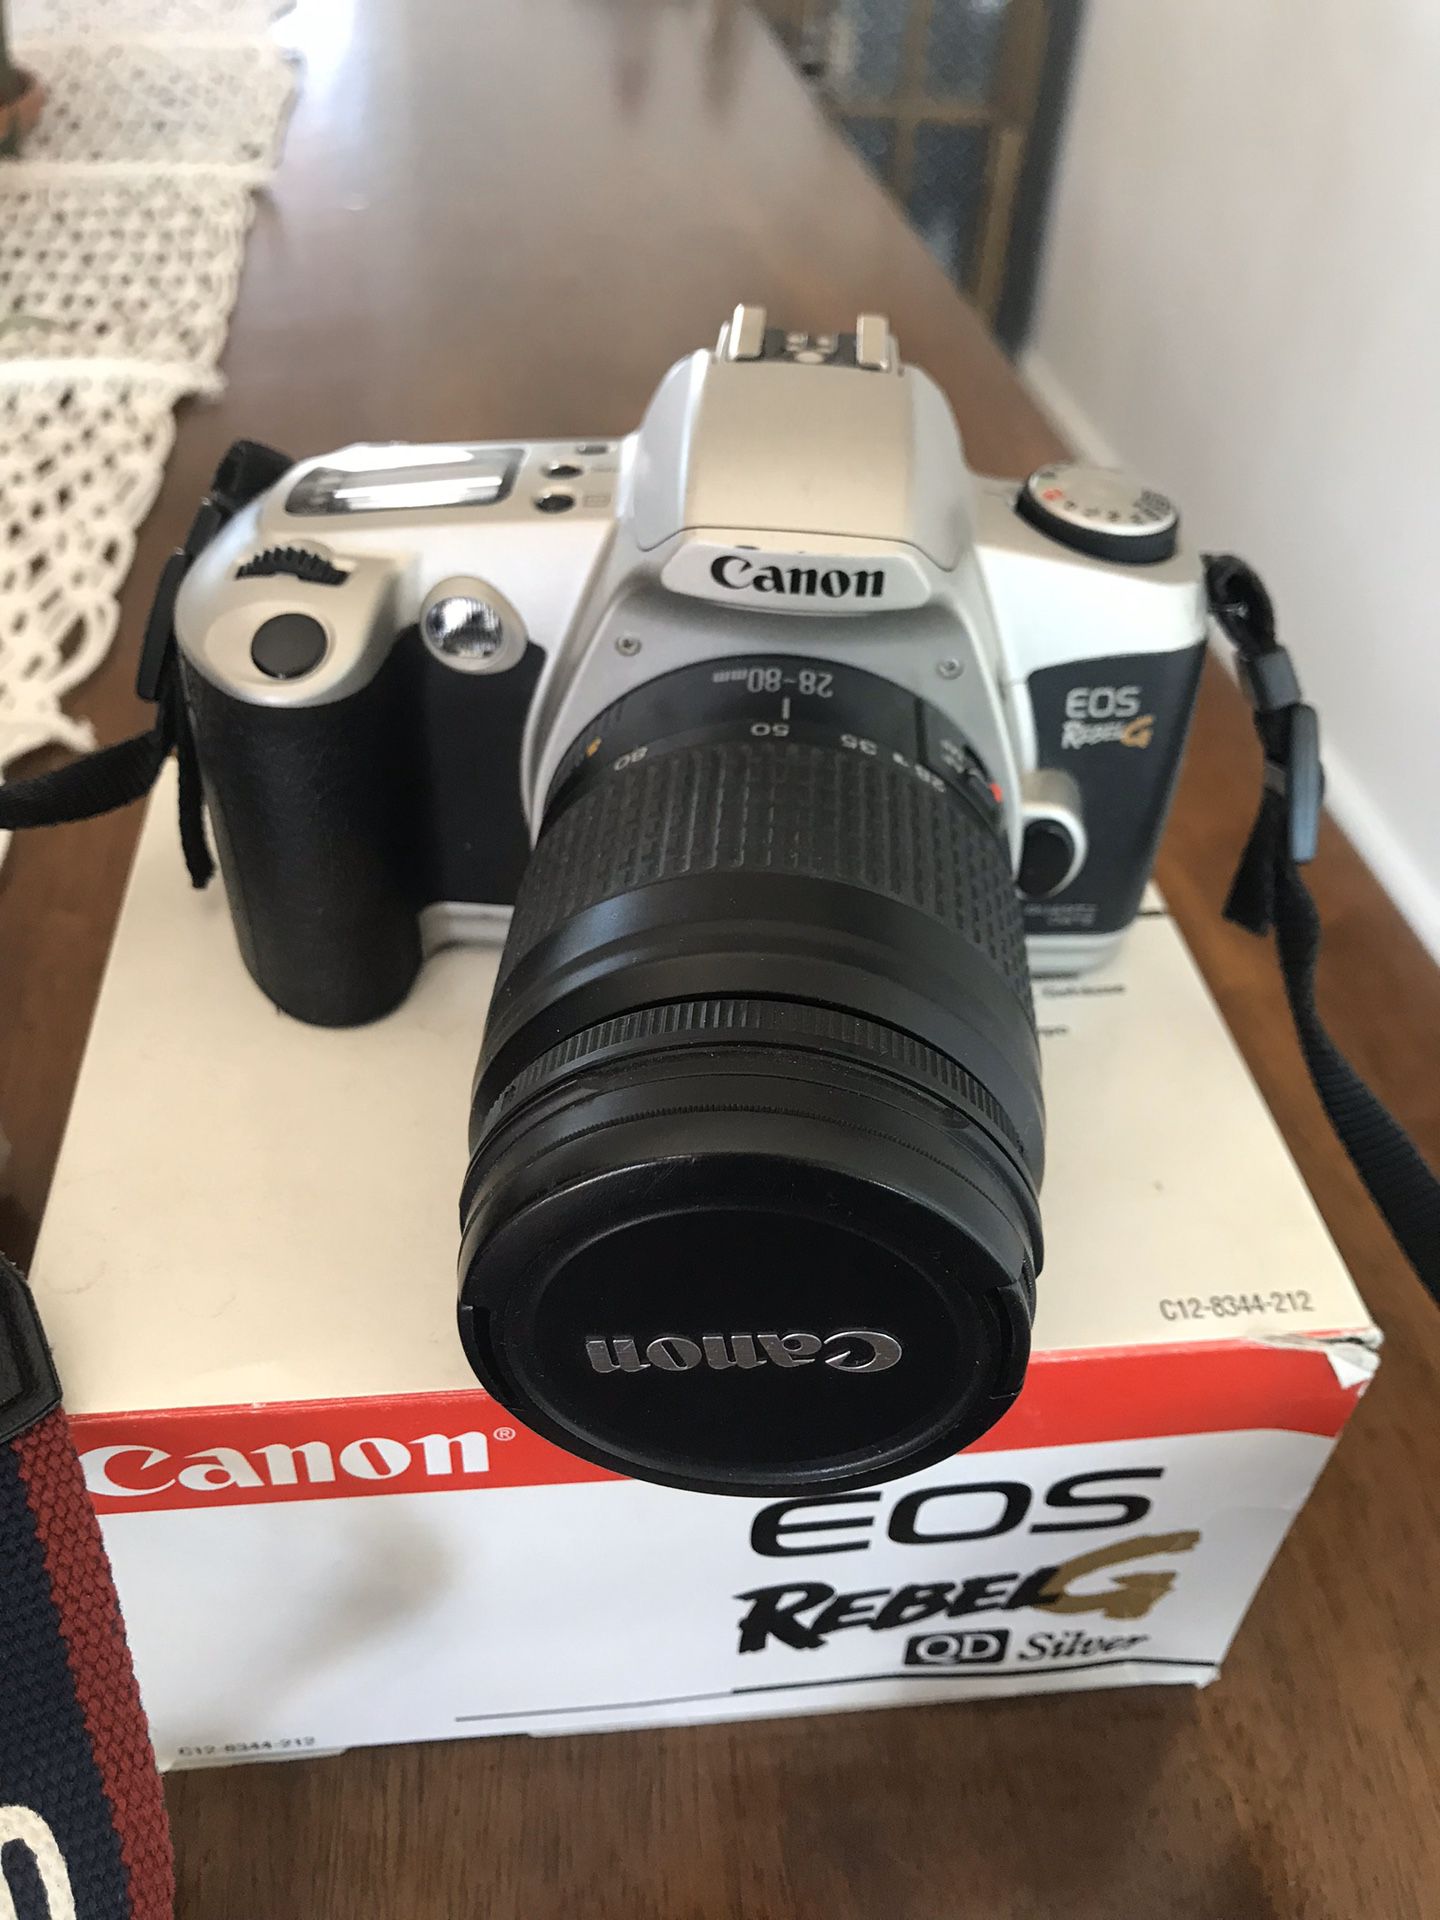 Canon FILM camera and lenses